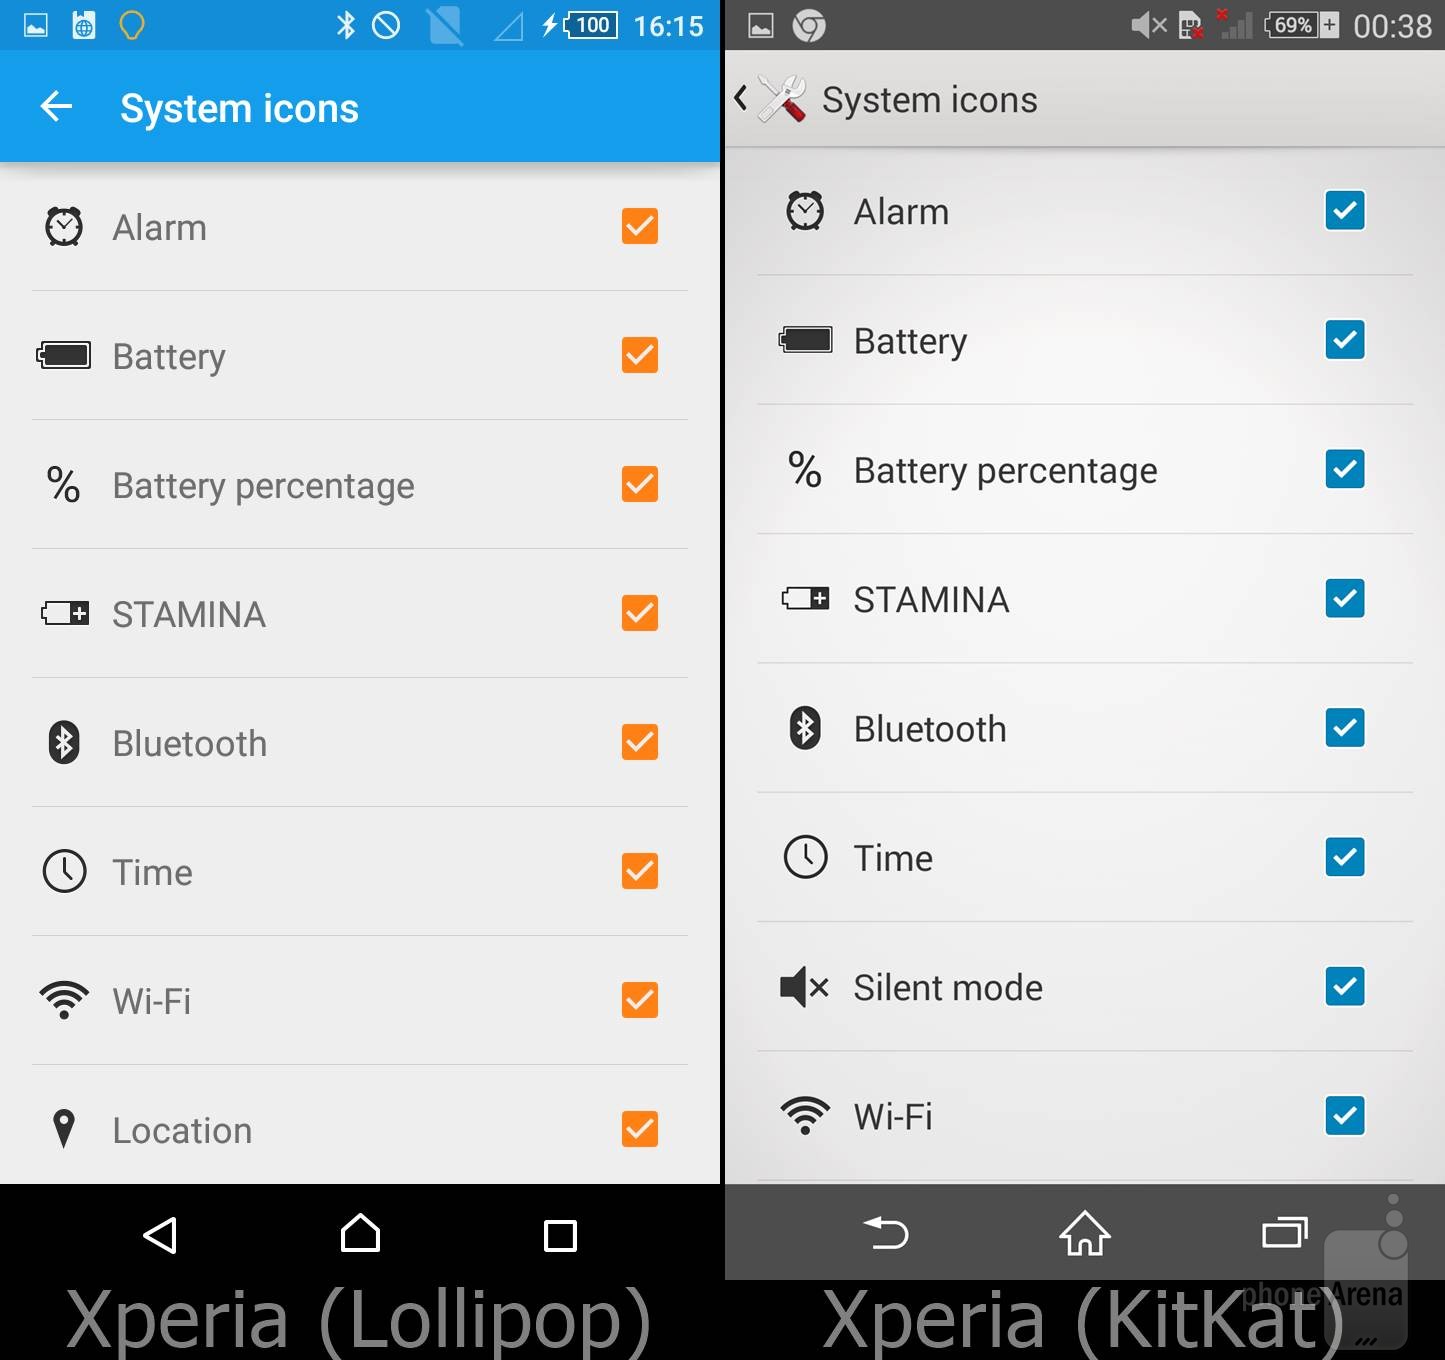 Xperia Lollipop vs Xperia KitKat UI Comparison 8